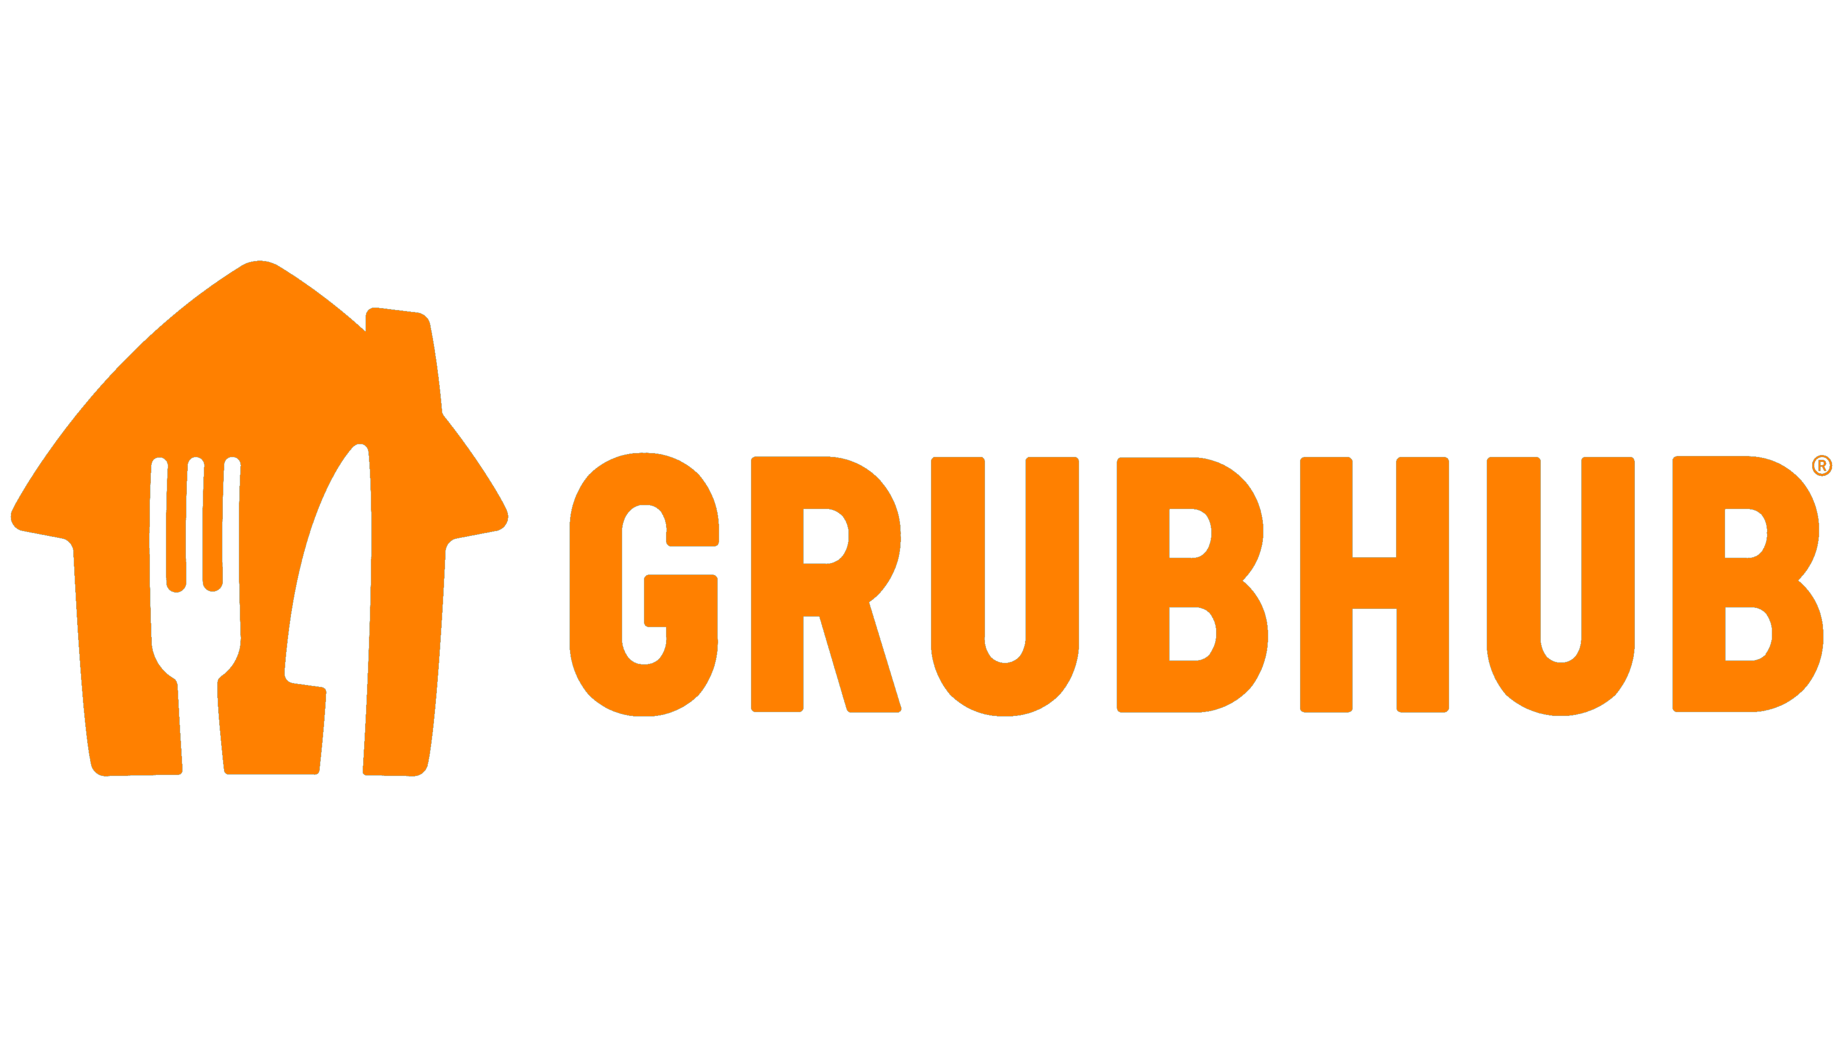 Grubhub sign 2021 present